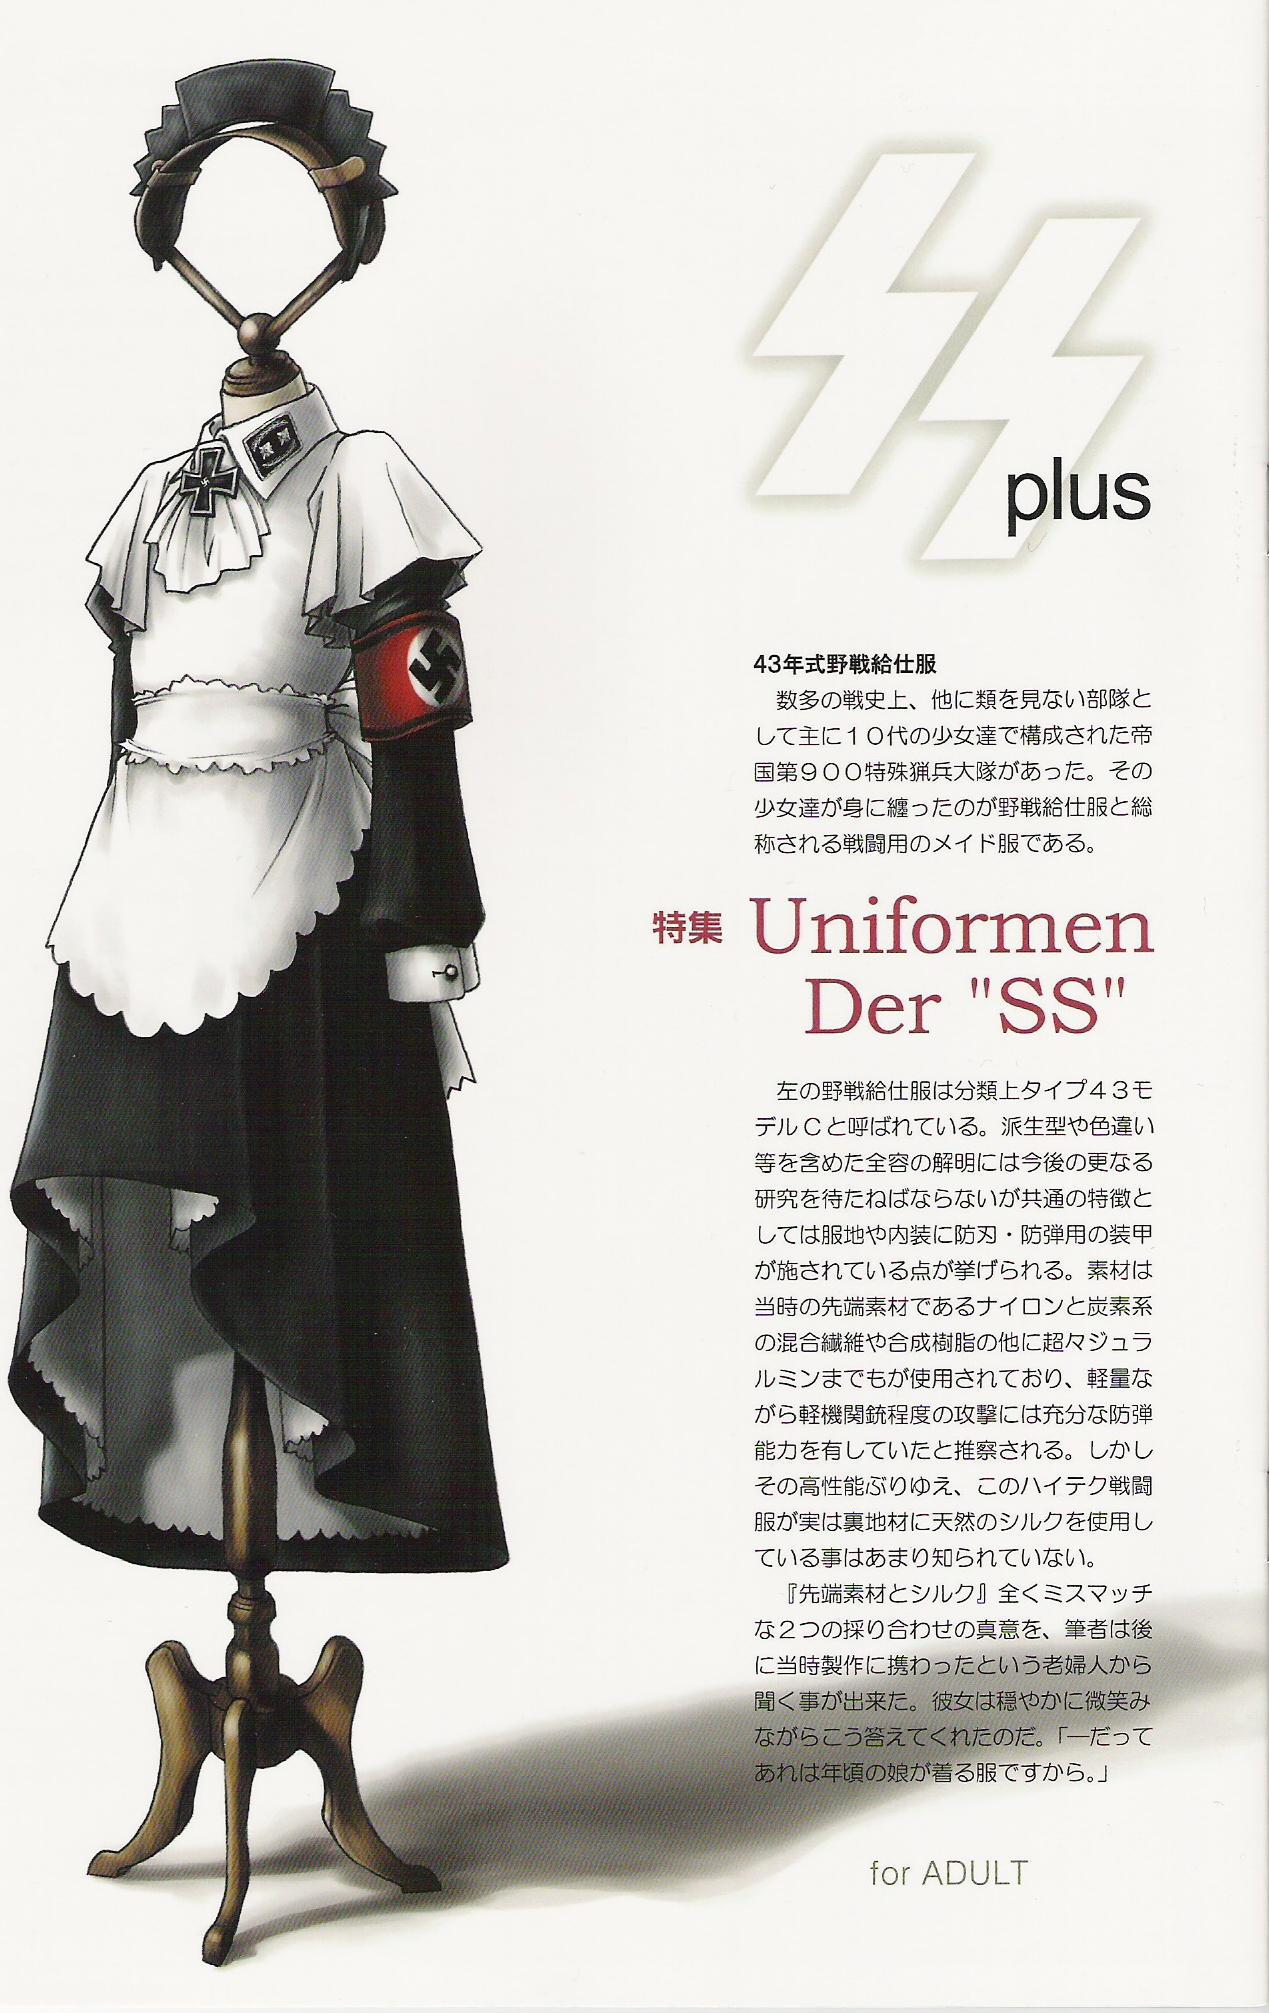 SS 2 Plus Uniformen Der SS 3